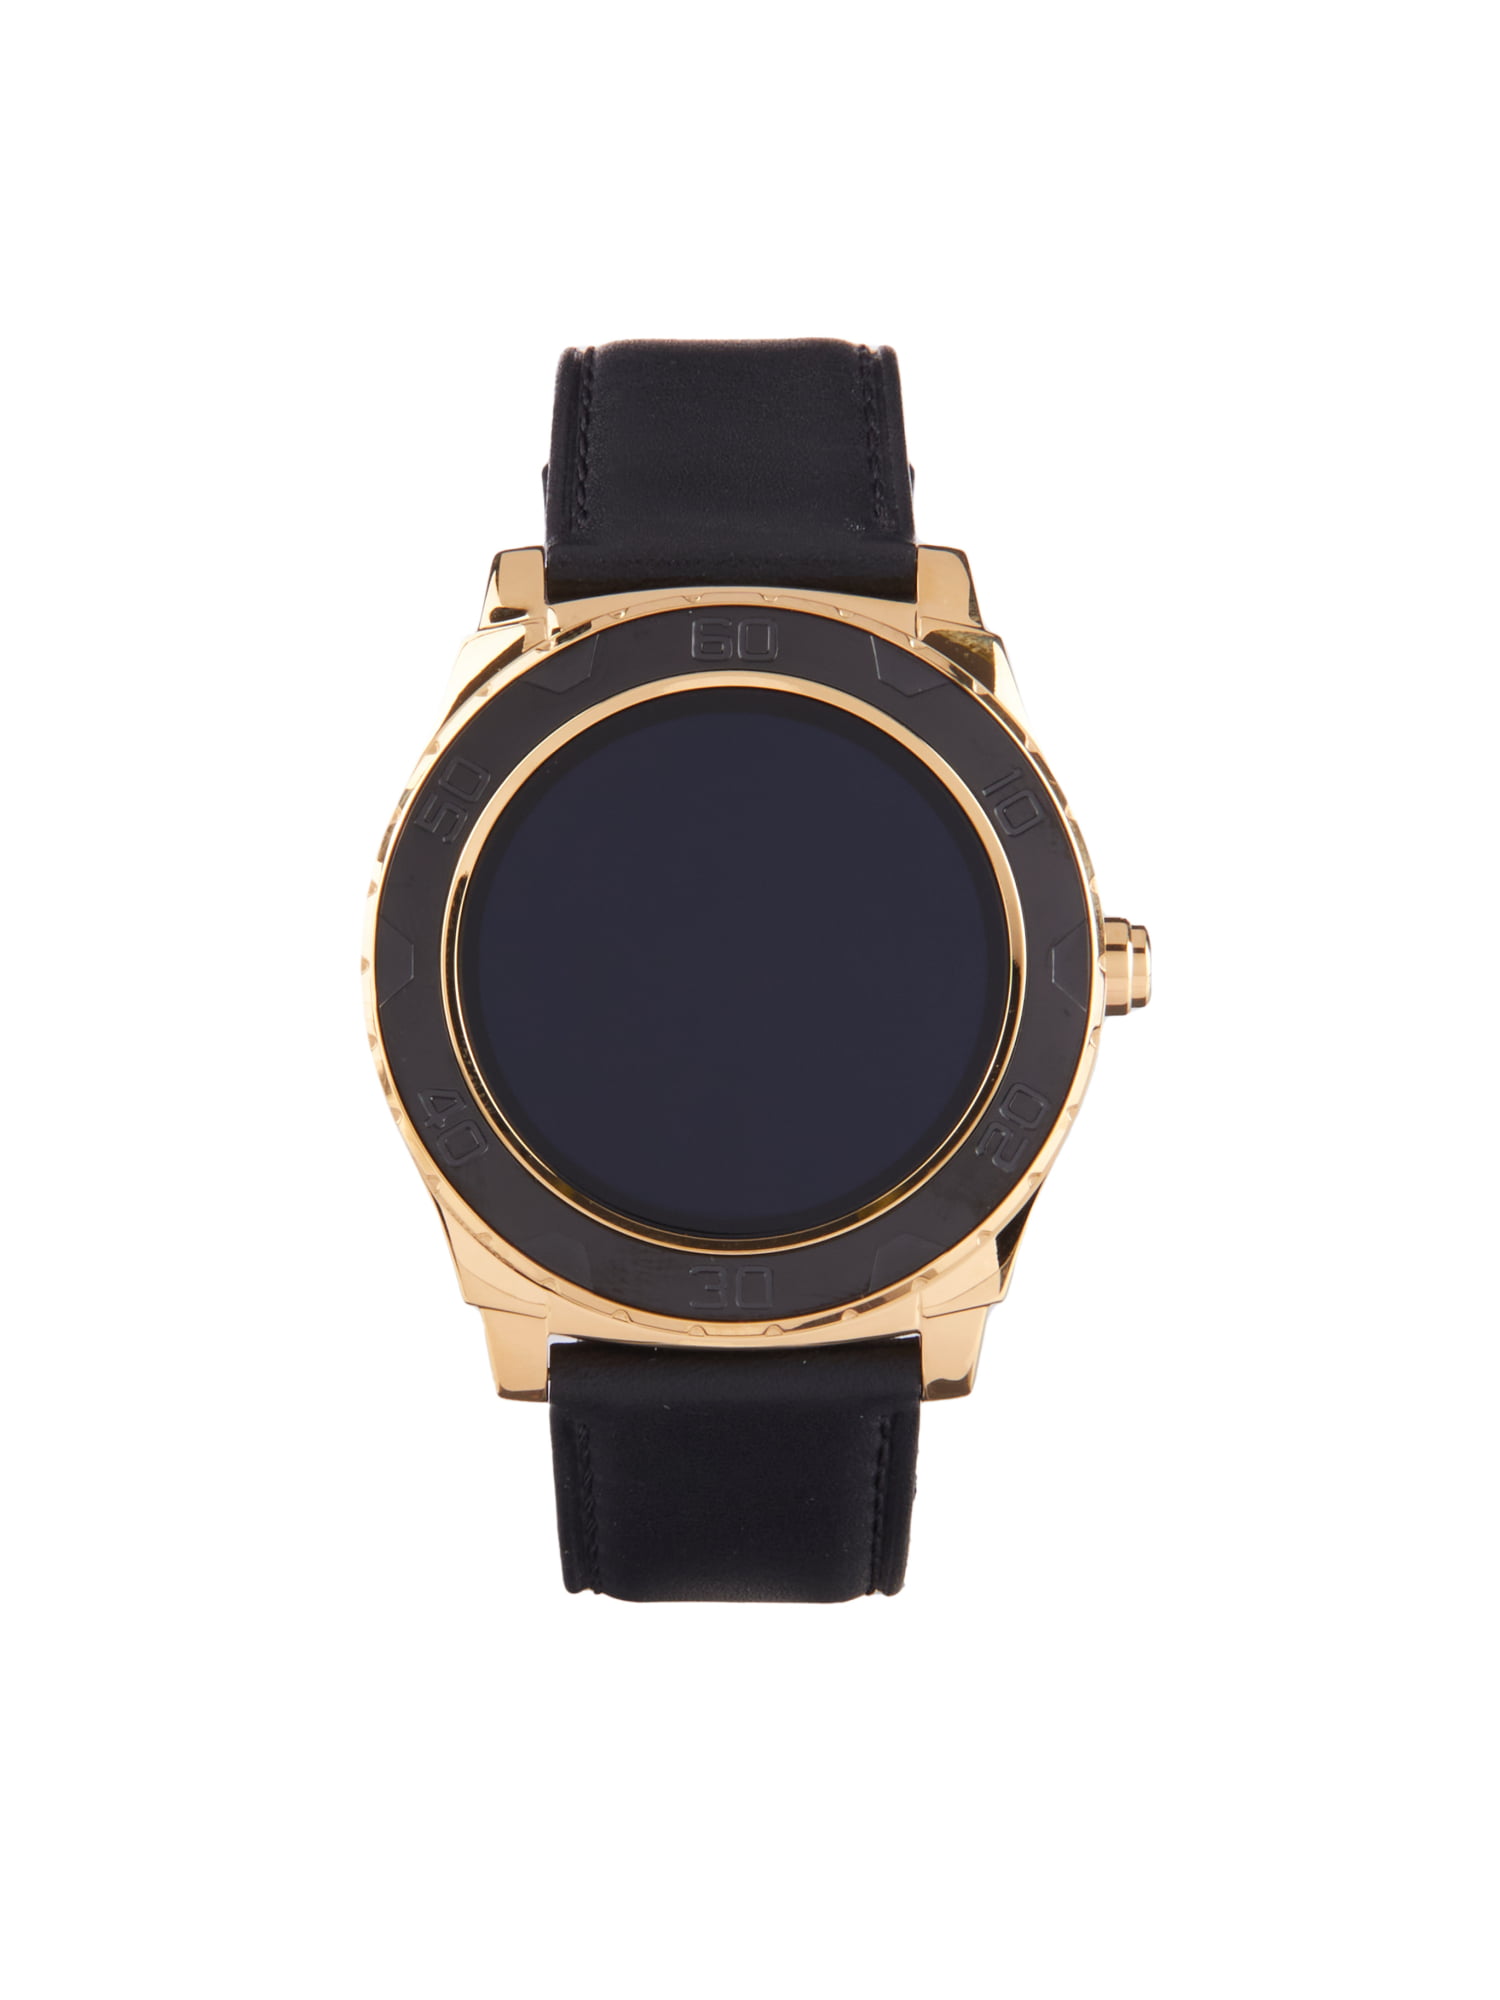 Men's Smart Watch - Gold/Black - Walmart.com